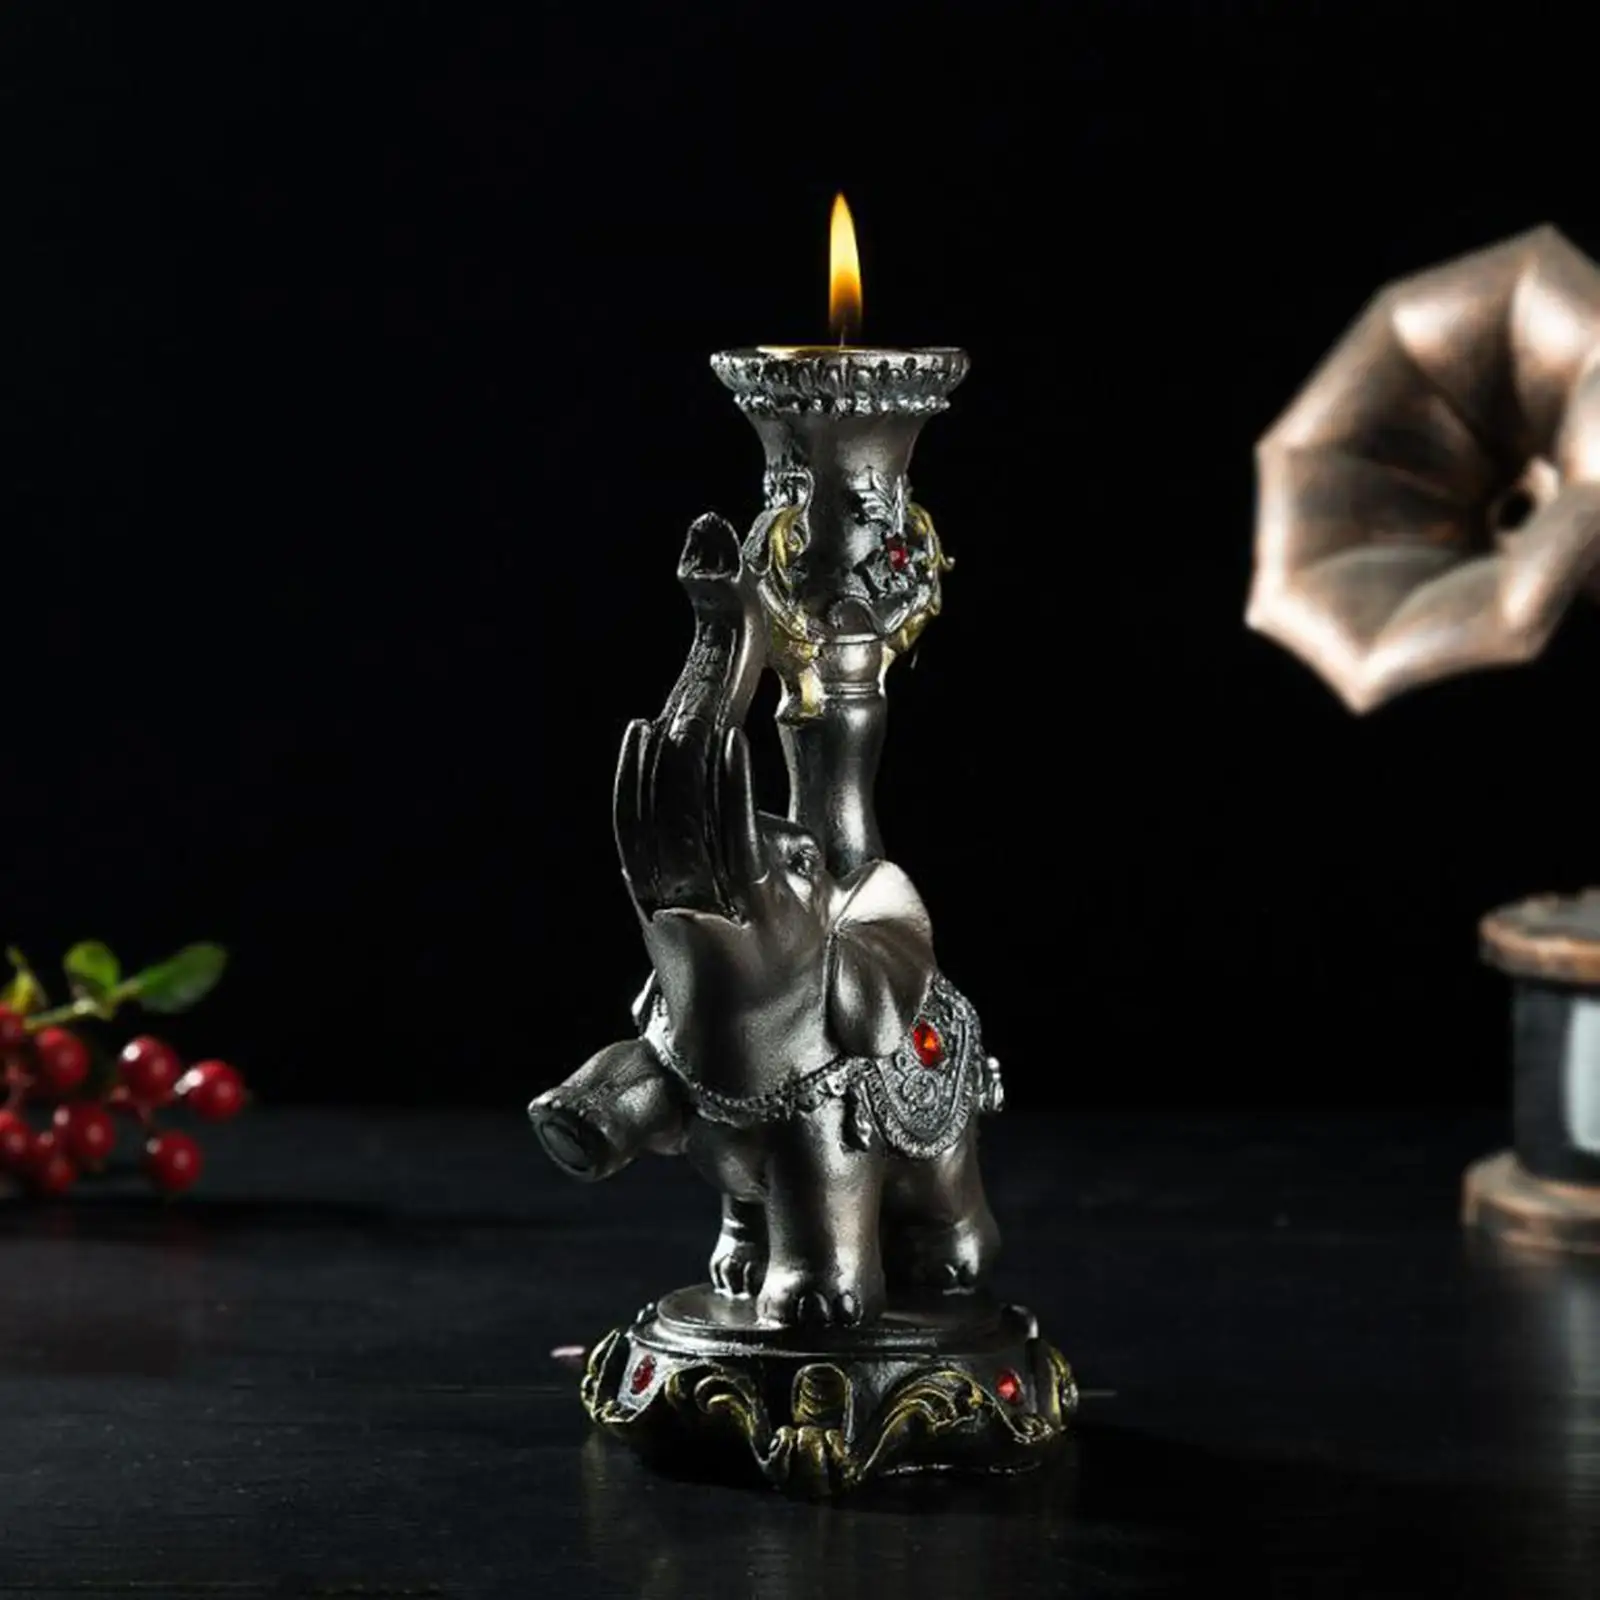 Retro European Elephant Candle Holder Decorative Crafts Figurine Elephant Statue for Holiday Wedding Party Centerpiece Ornaments